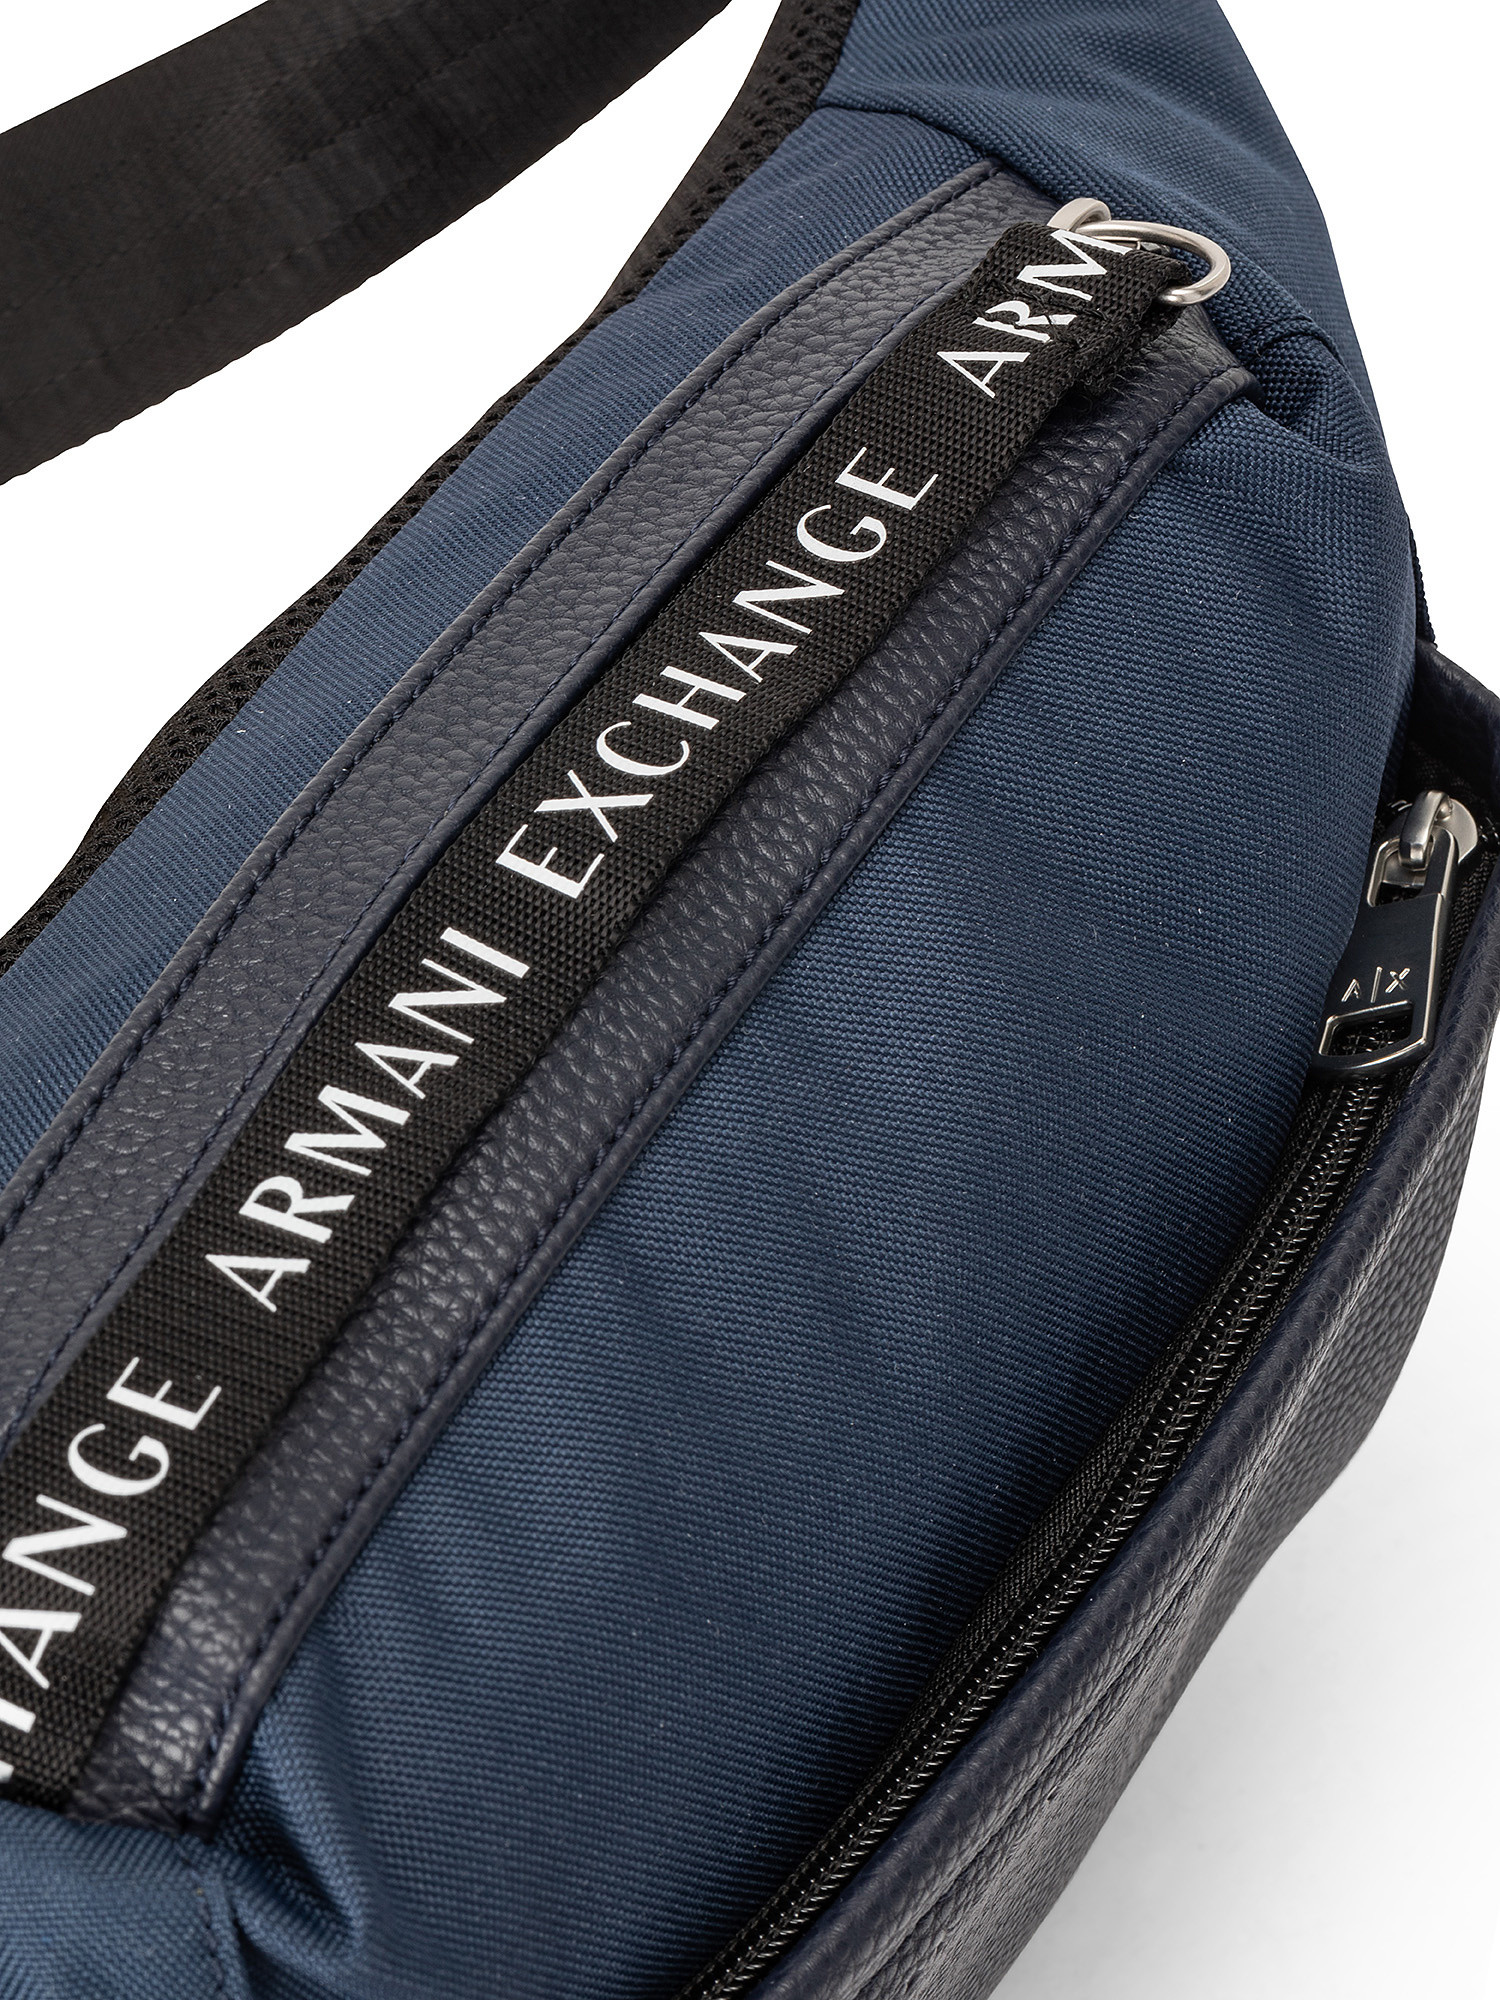 Armani Exchange - Waist bag with logo tape, Blue, large image number 2